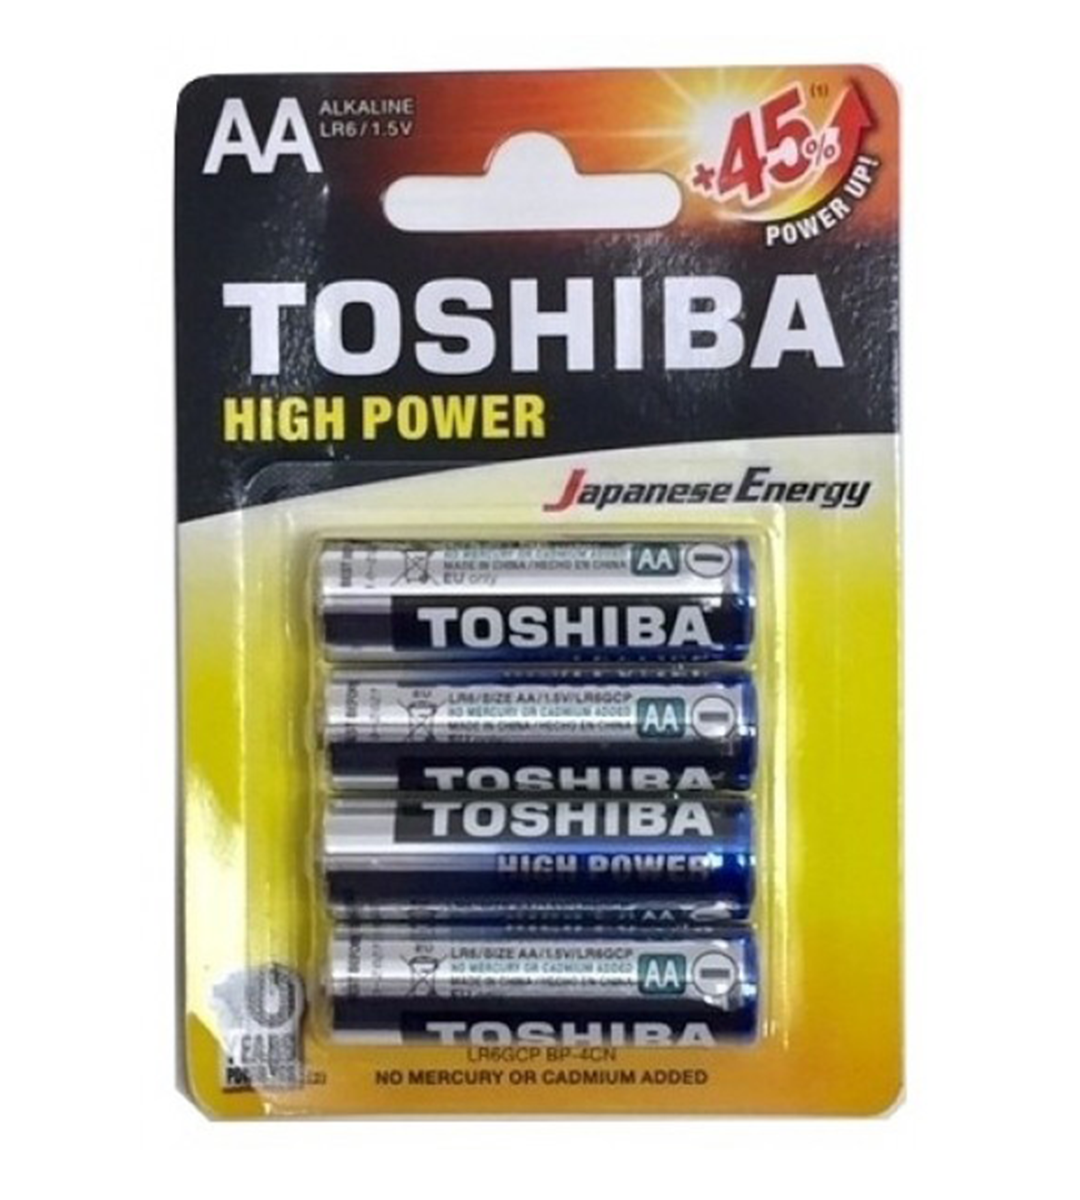 Toshiba Size AA High Power Alkaline Batteries, LR6GCP-BP-4CN (4 Pack)